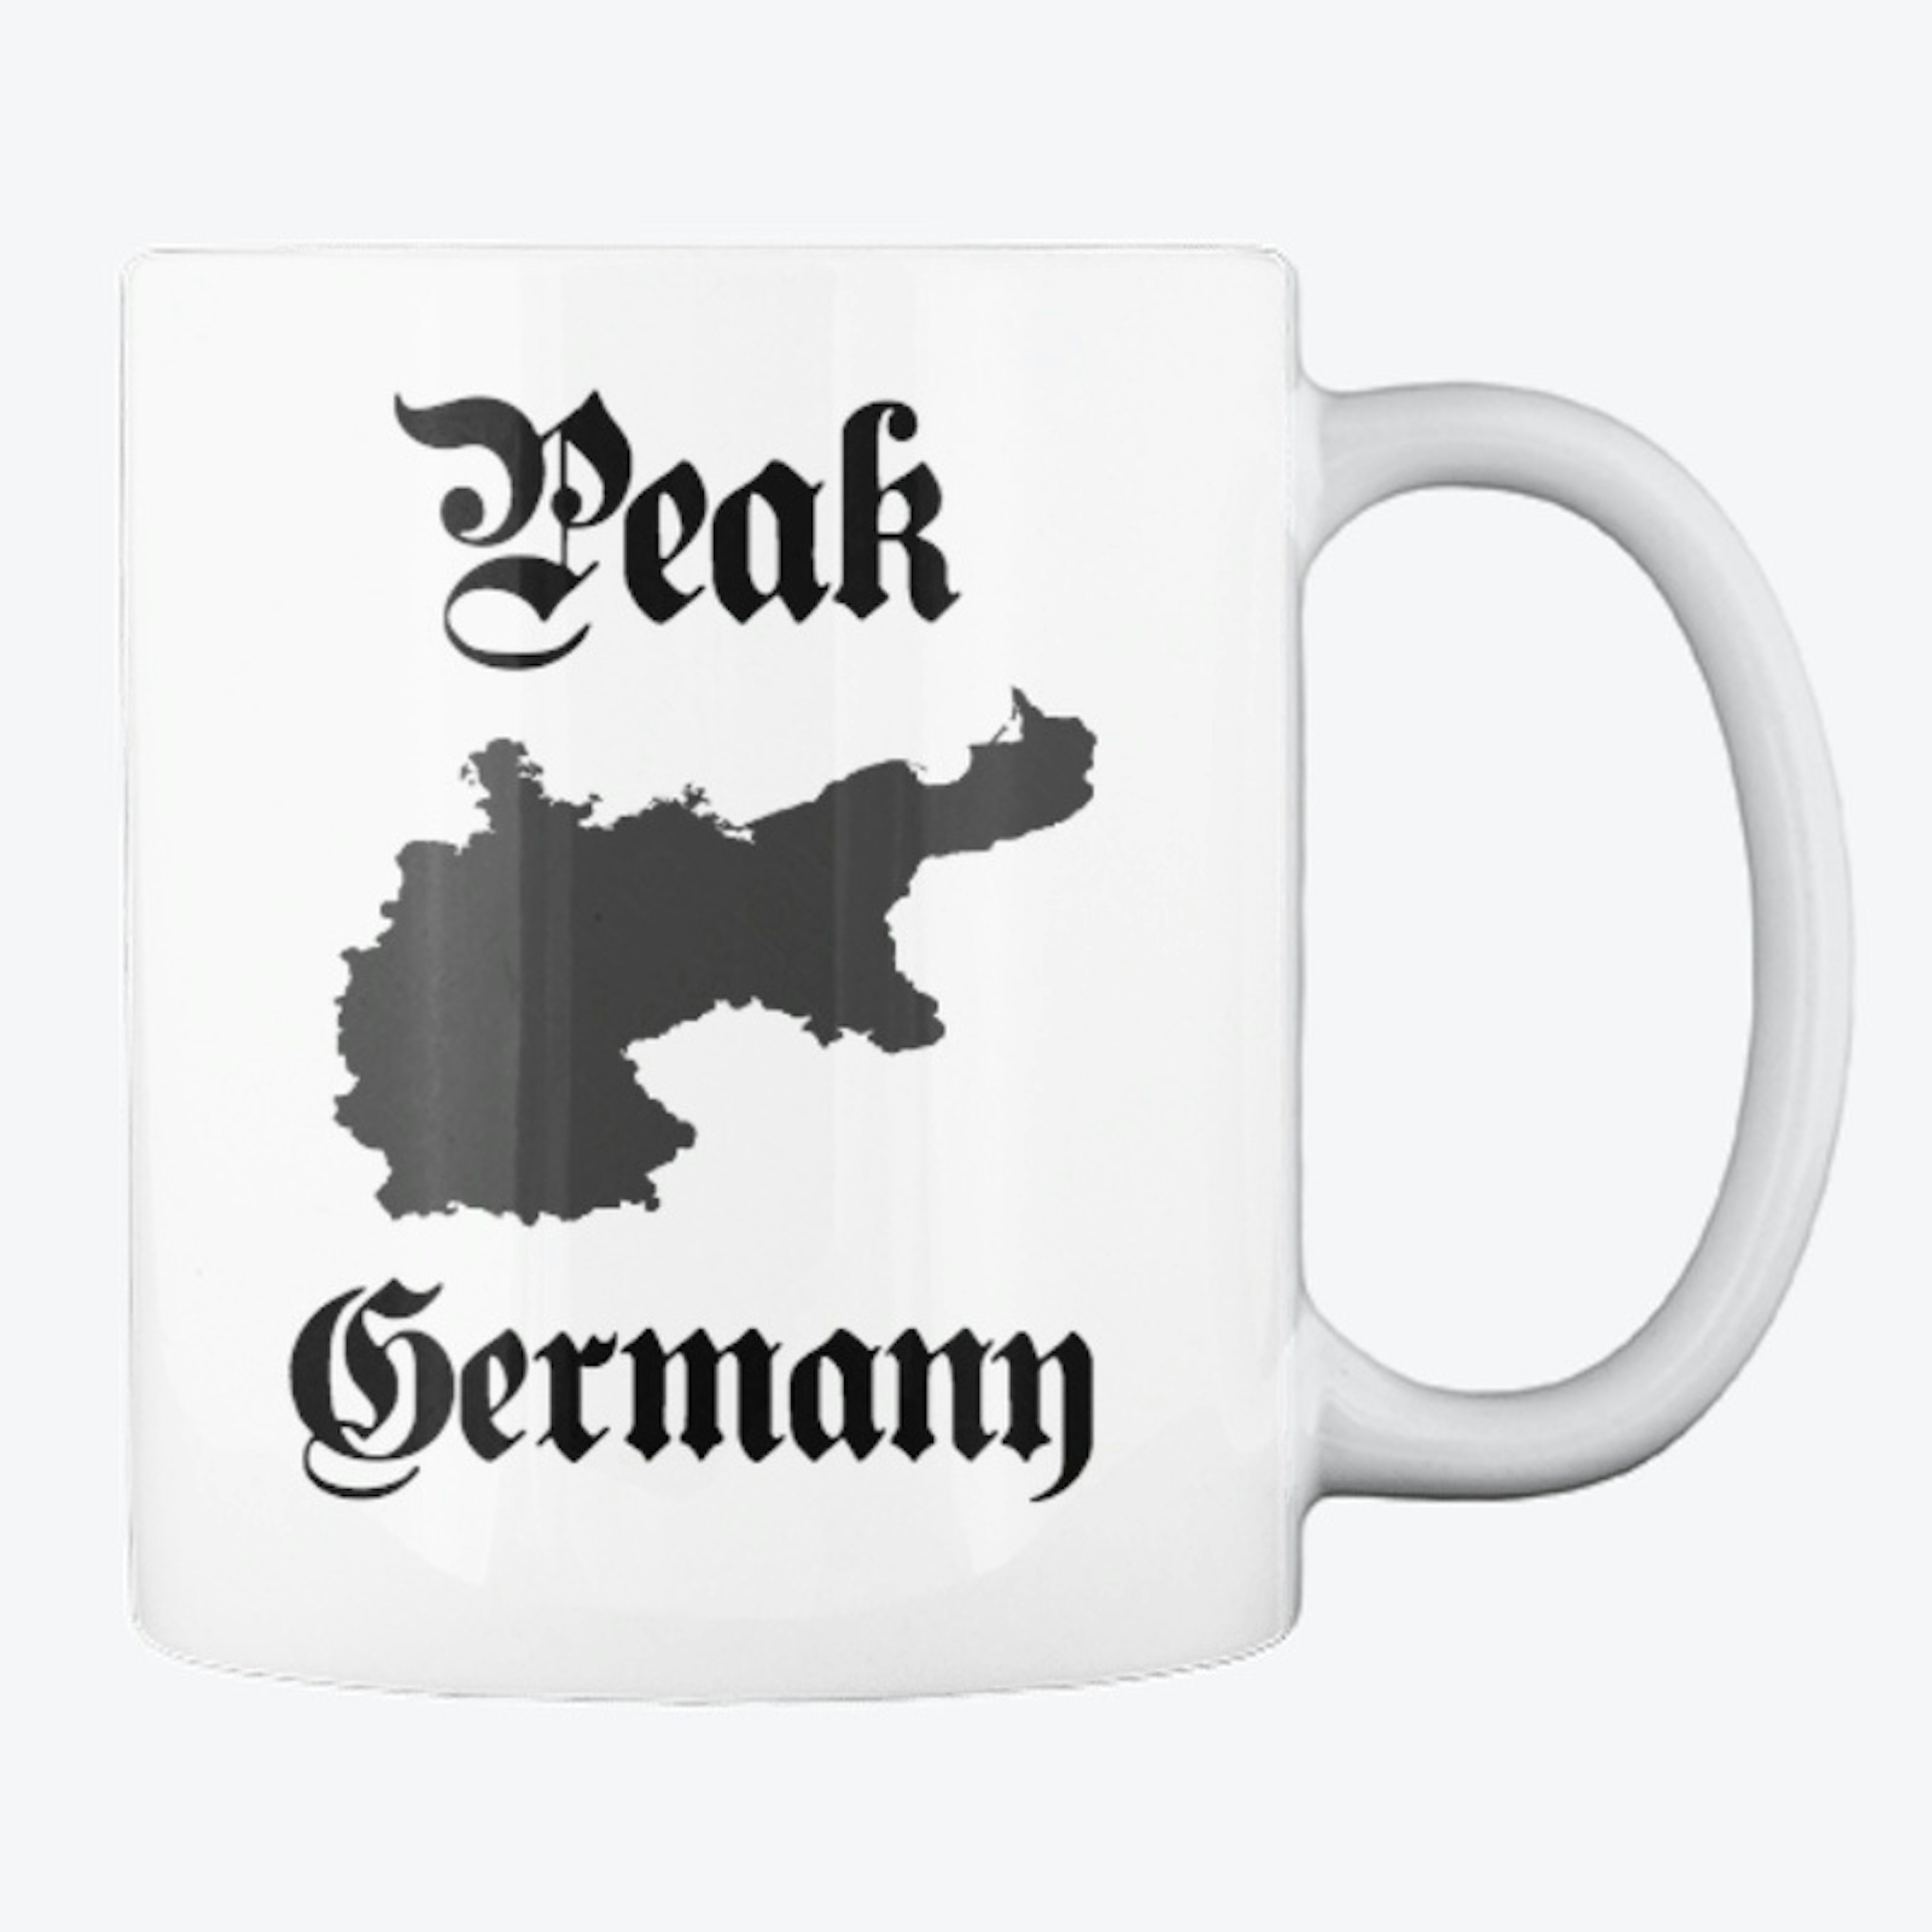 Peak Germany Mug